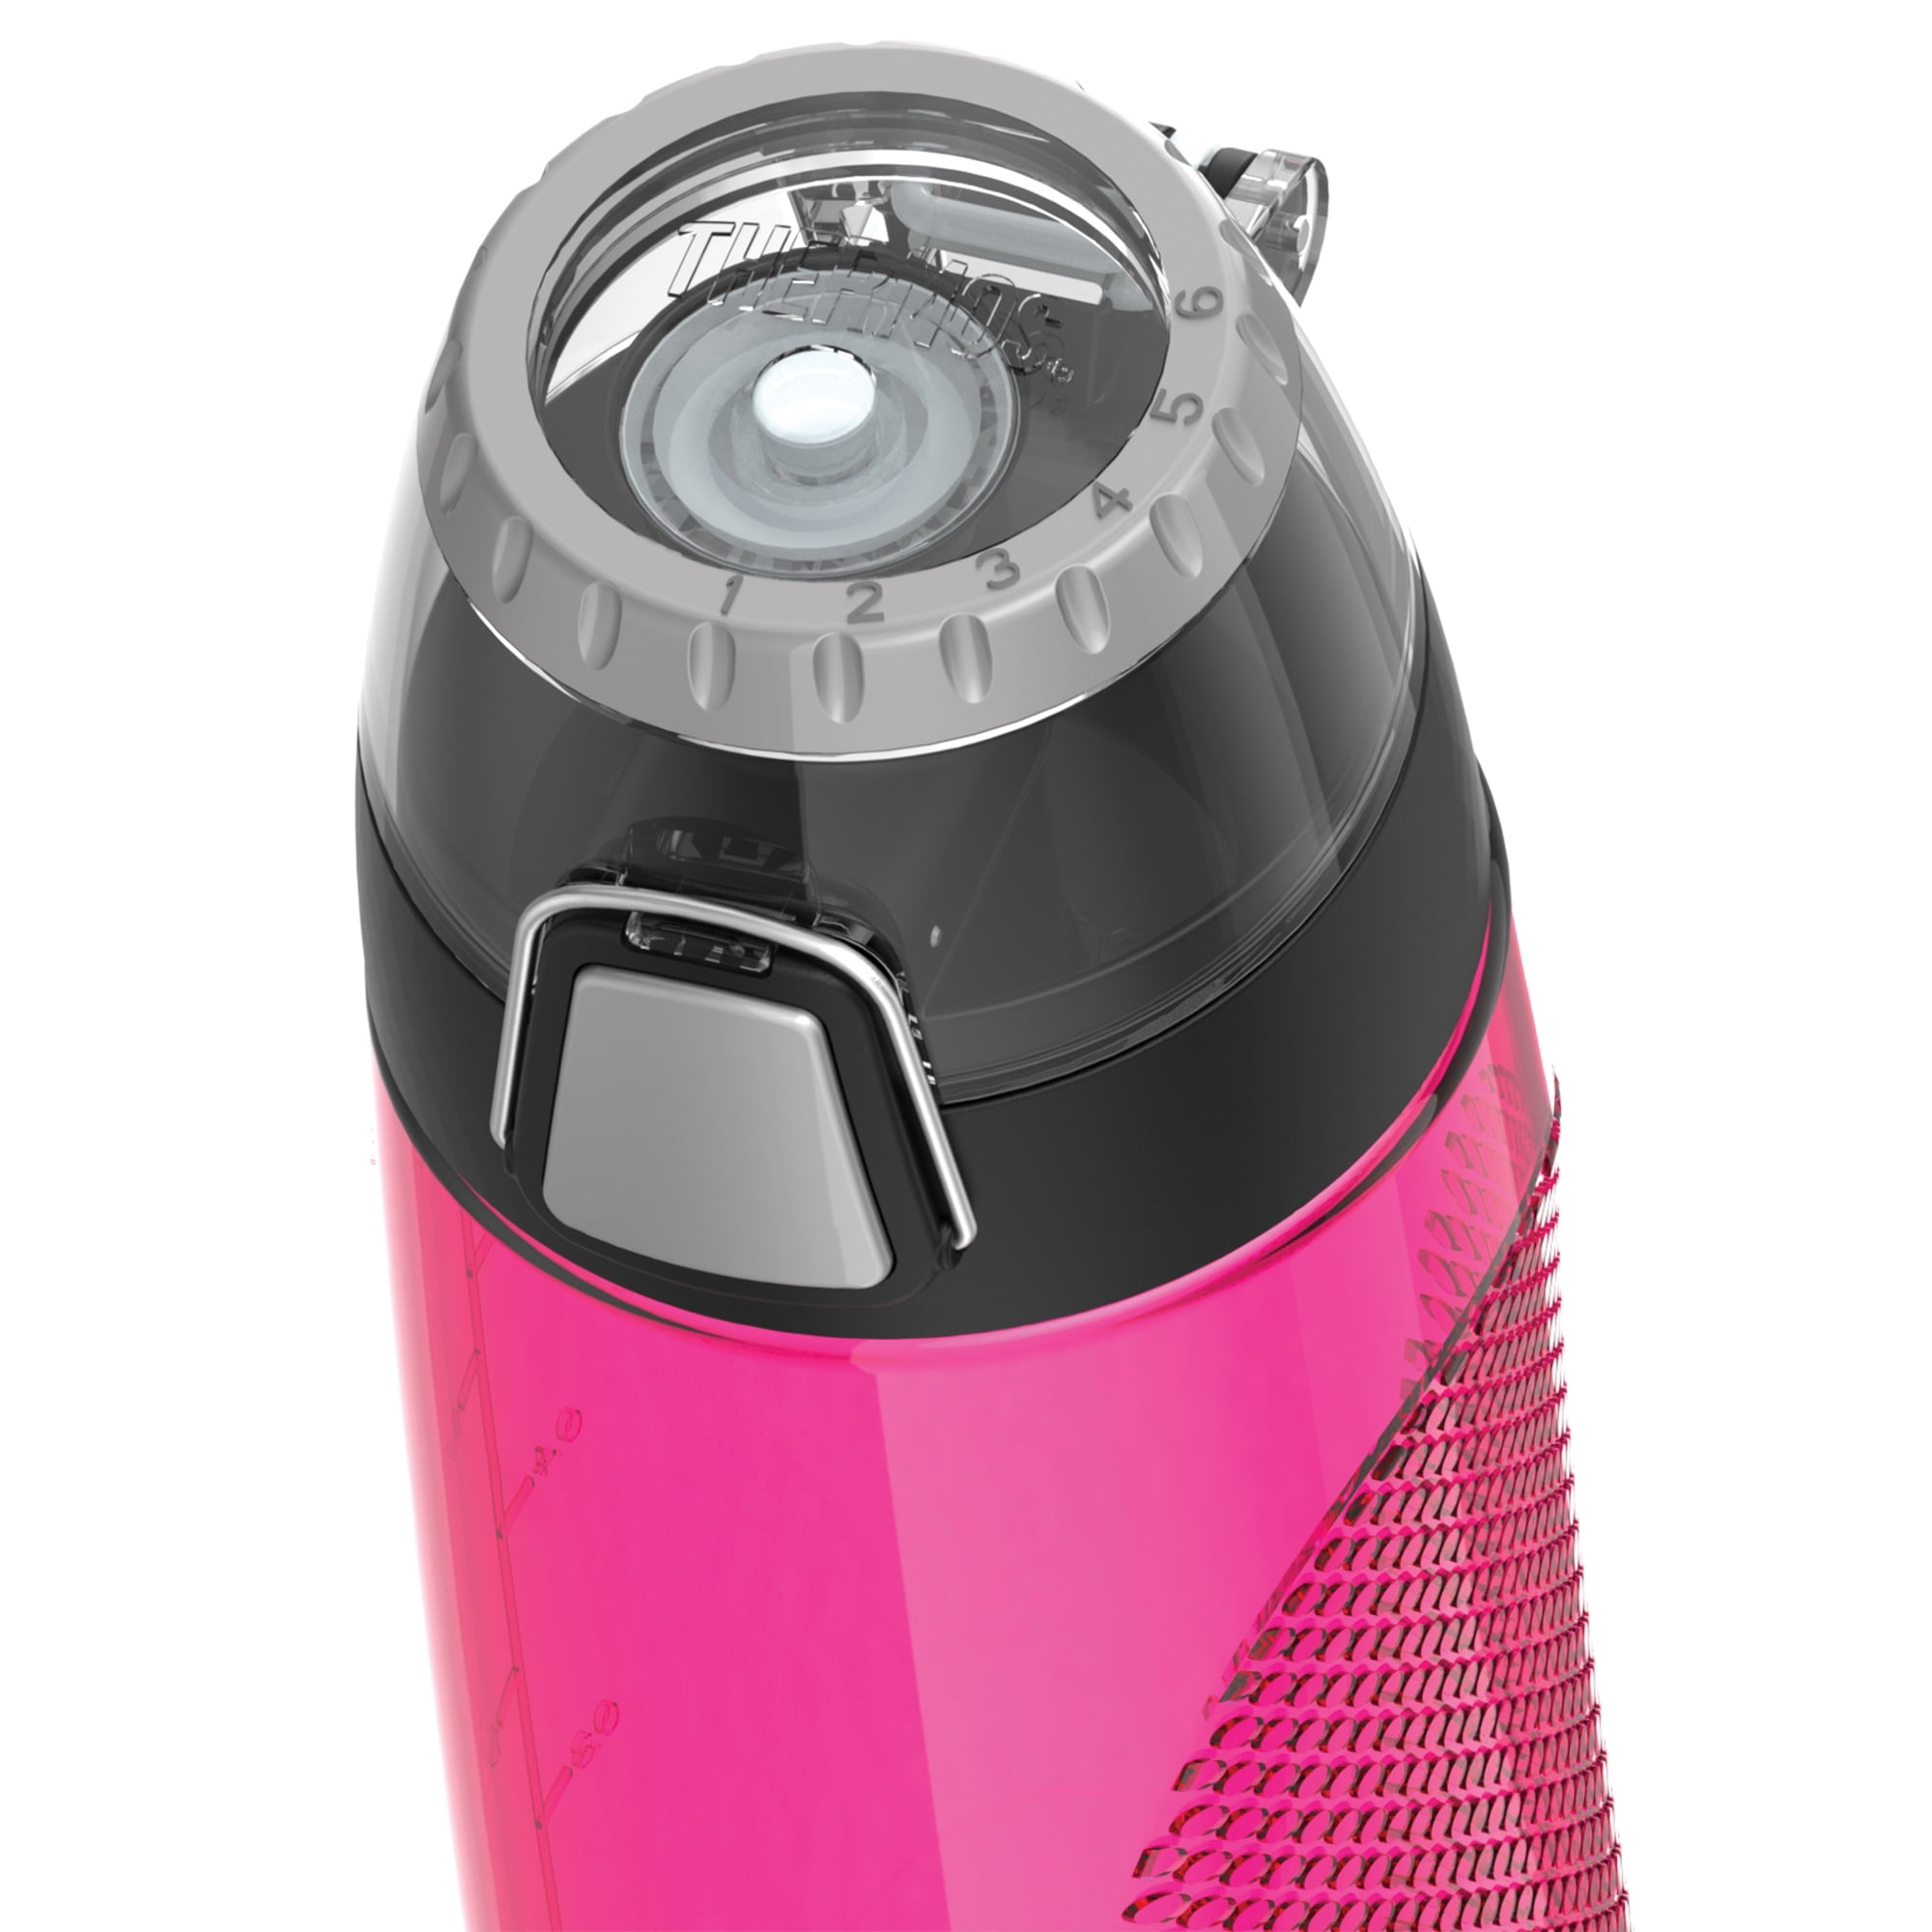 Thermos ULTRALIGHT Drink Bottle - deep pink - Interismo Online Shop Global